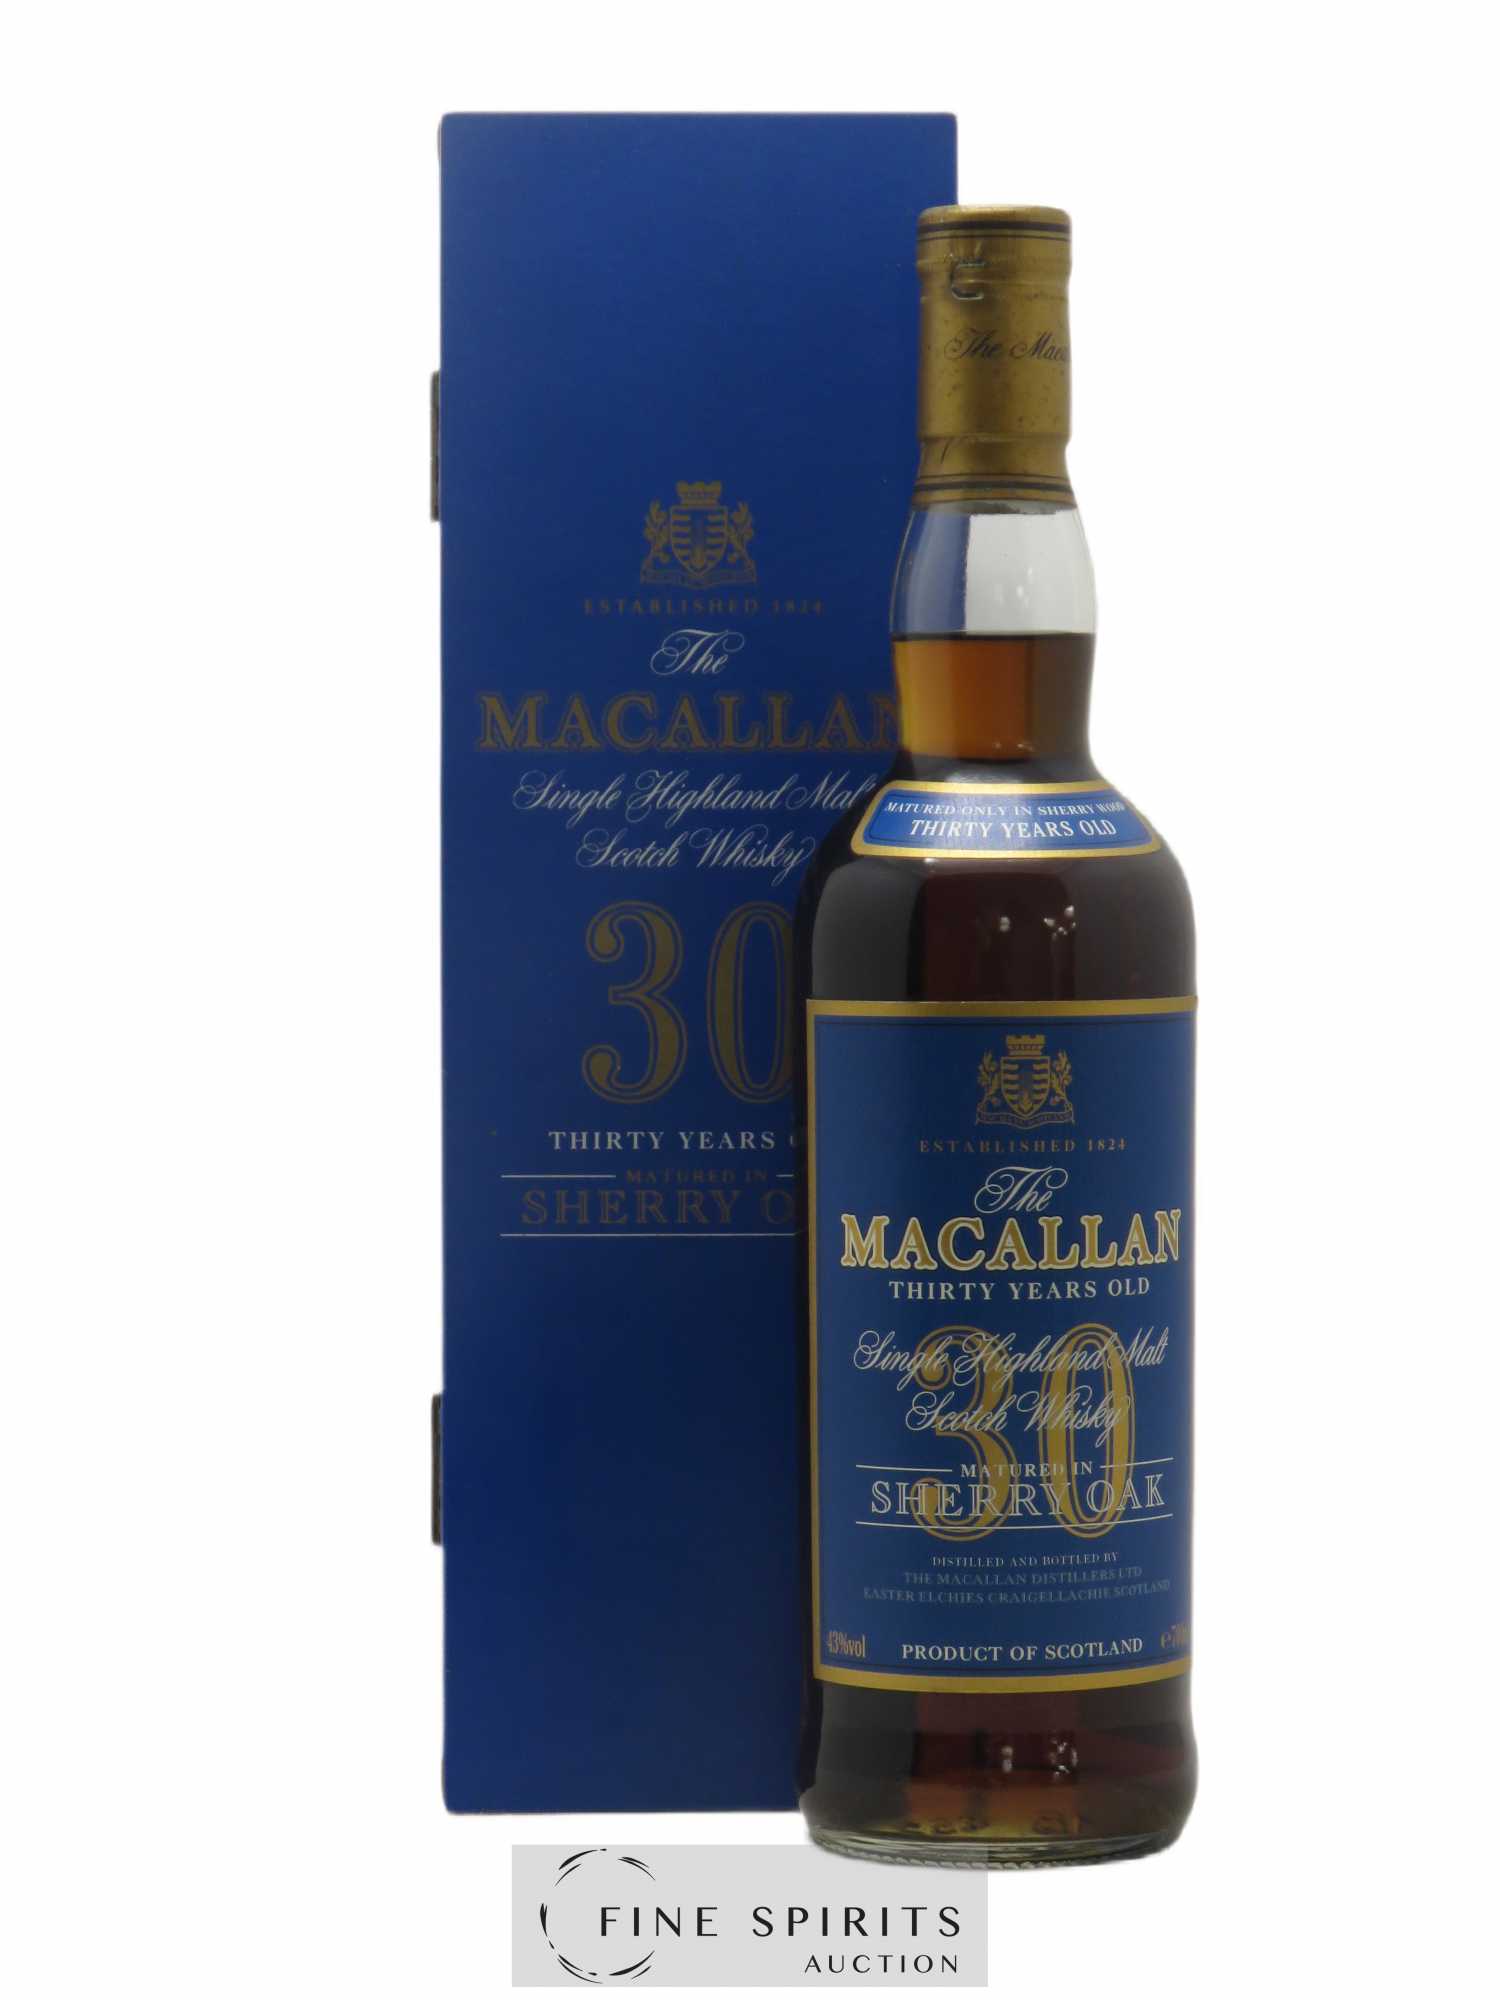 Macallan (The) 30 years Of. Sherry Oak 